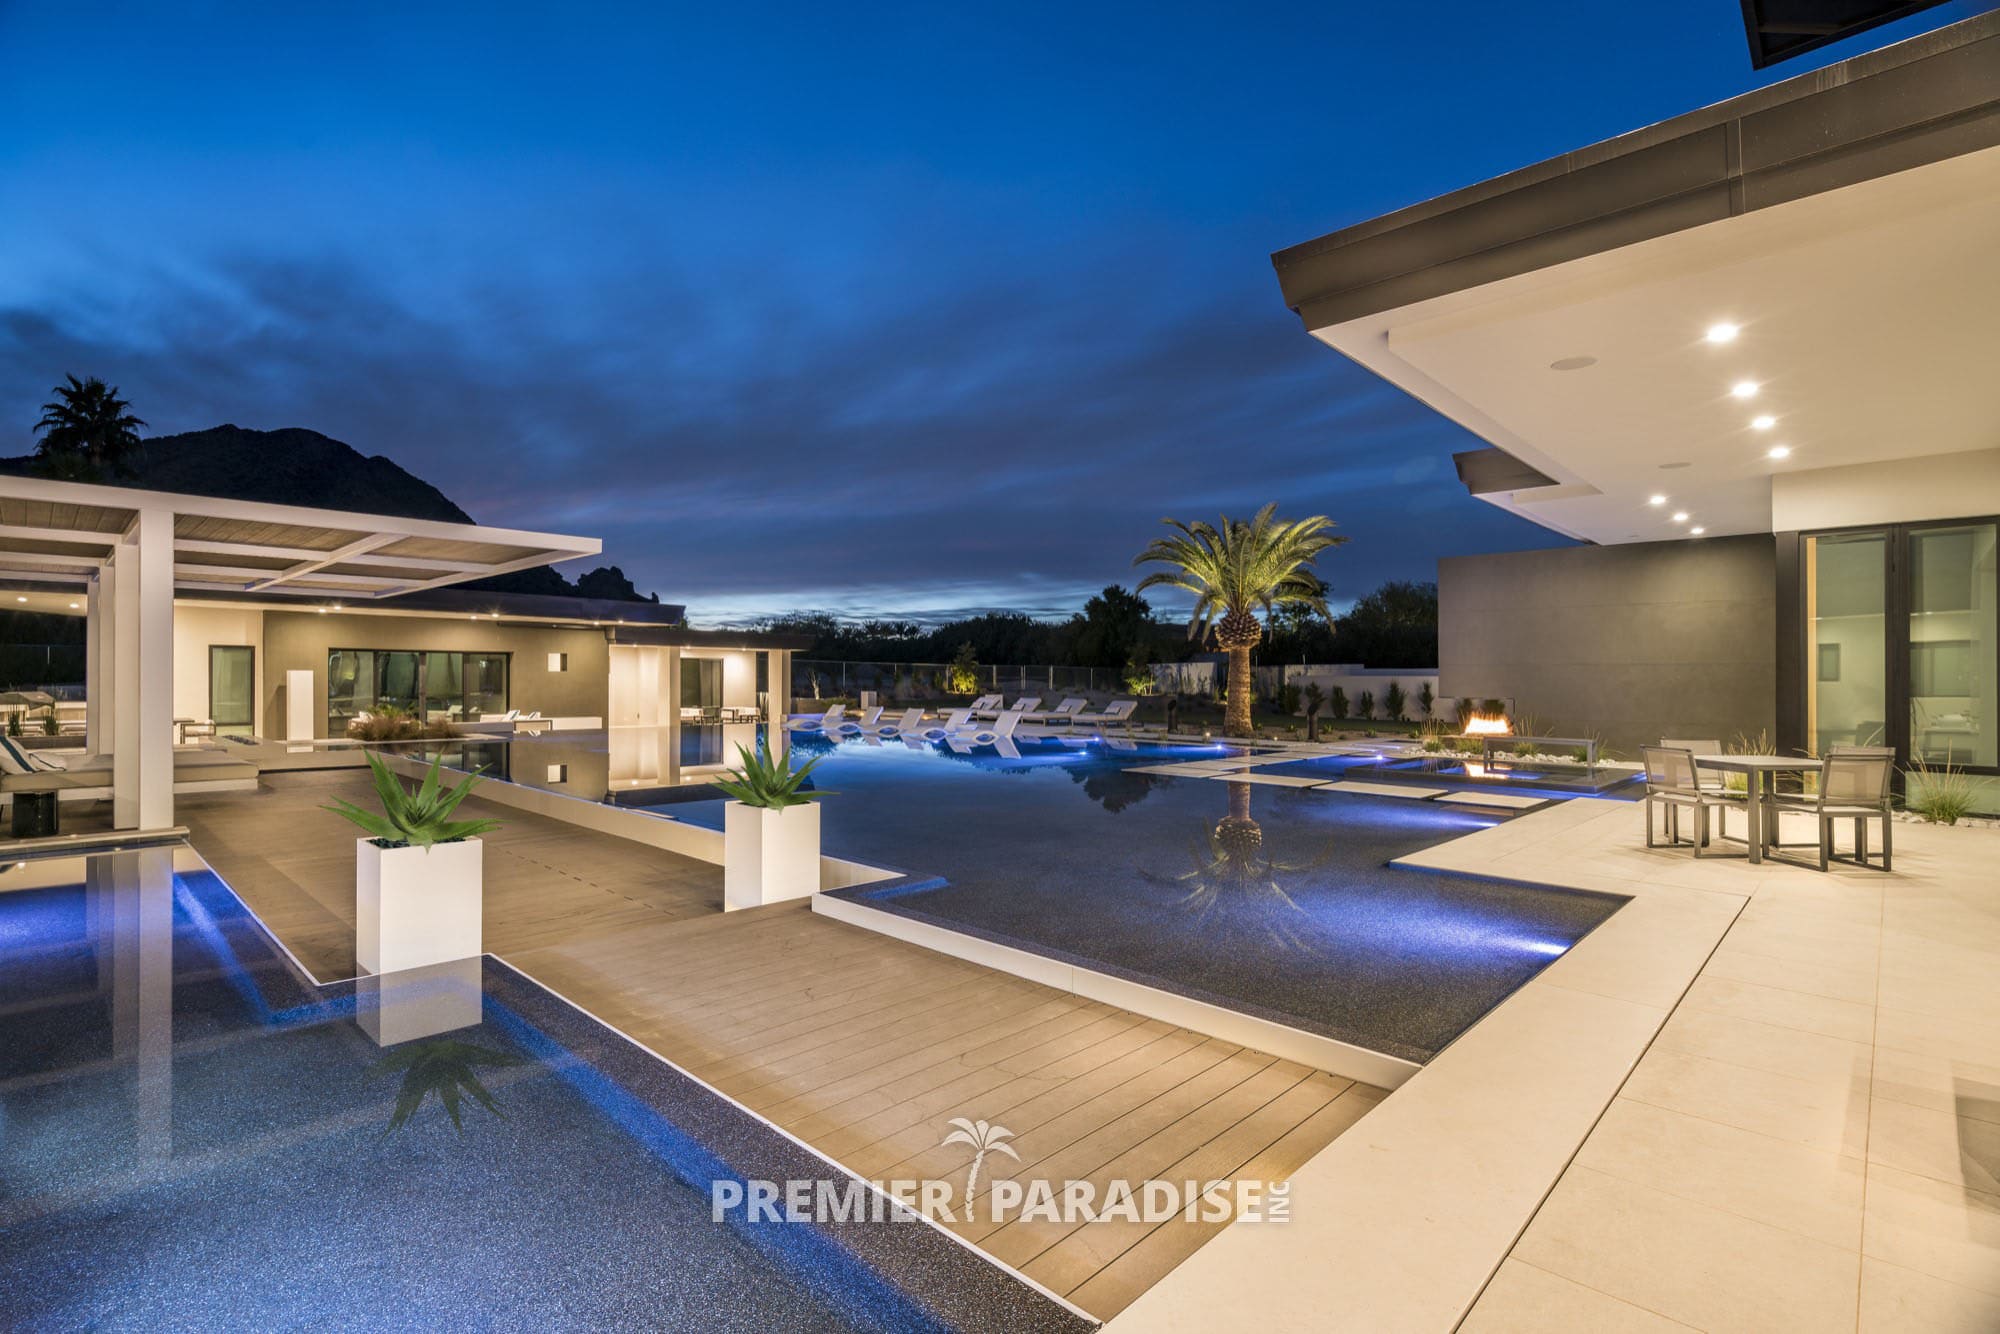 infinity edge pool design custom pool builder arizona premier paradise inc 19 watermarked 2000x1334